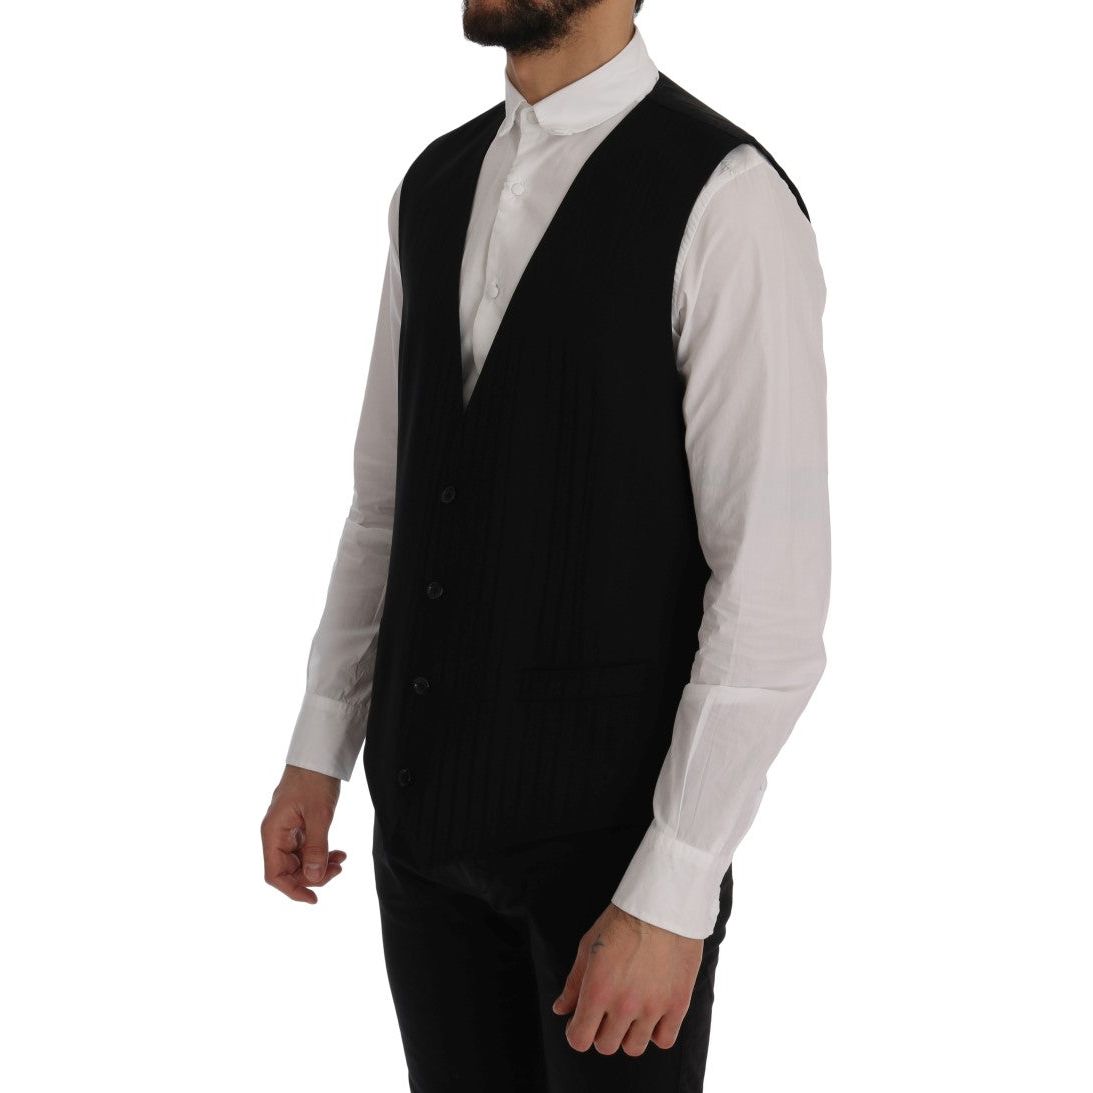 Dolce & Gabbana Elegant Striped Wool Blend Waistcoat Vest black-staff-wool-stretch-vest-3 499326-black-staff-wool-stretch-vest-5-1.jpg